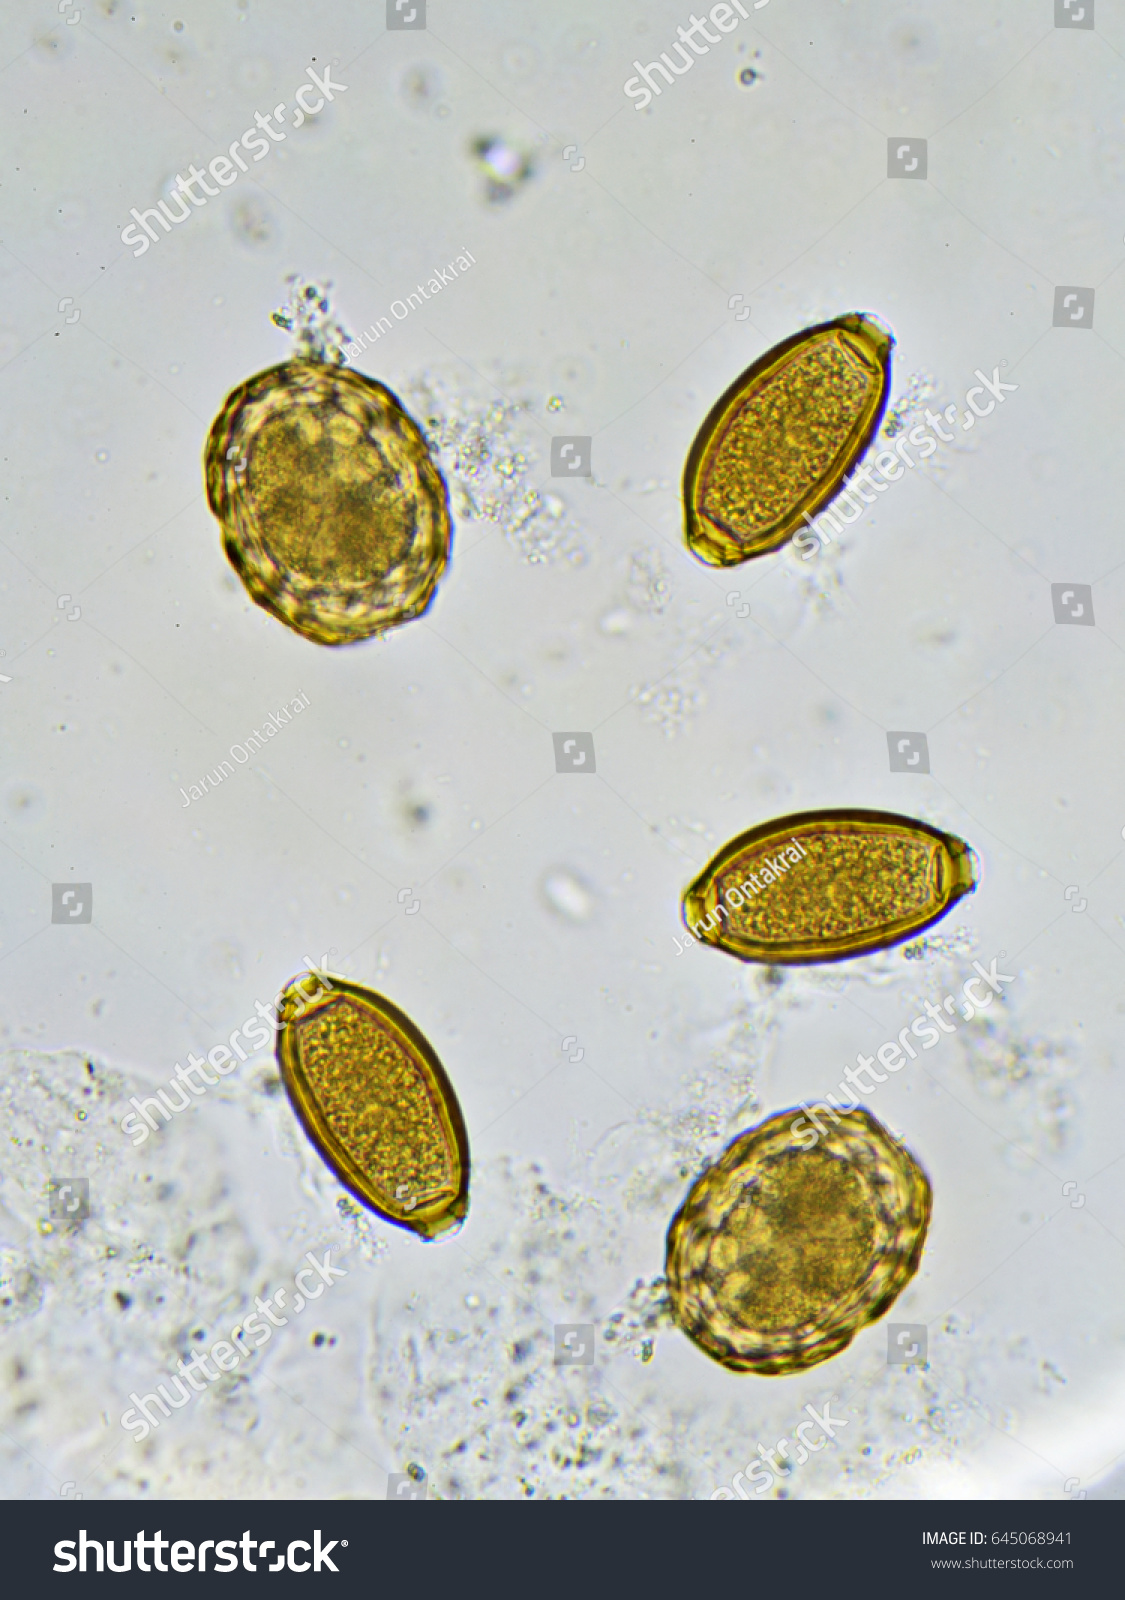 Ascaris lumbricoides яйца микроскоп